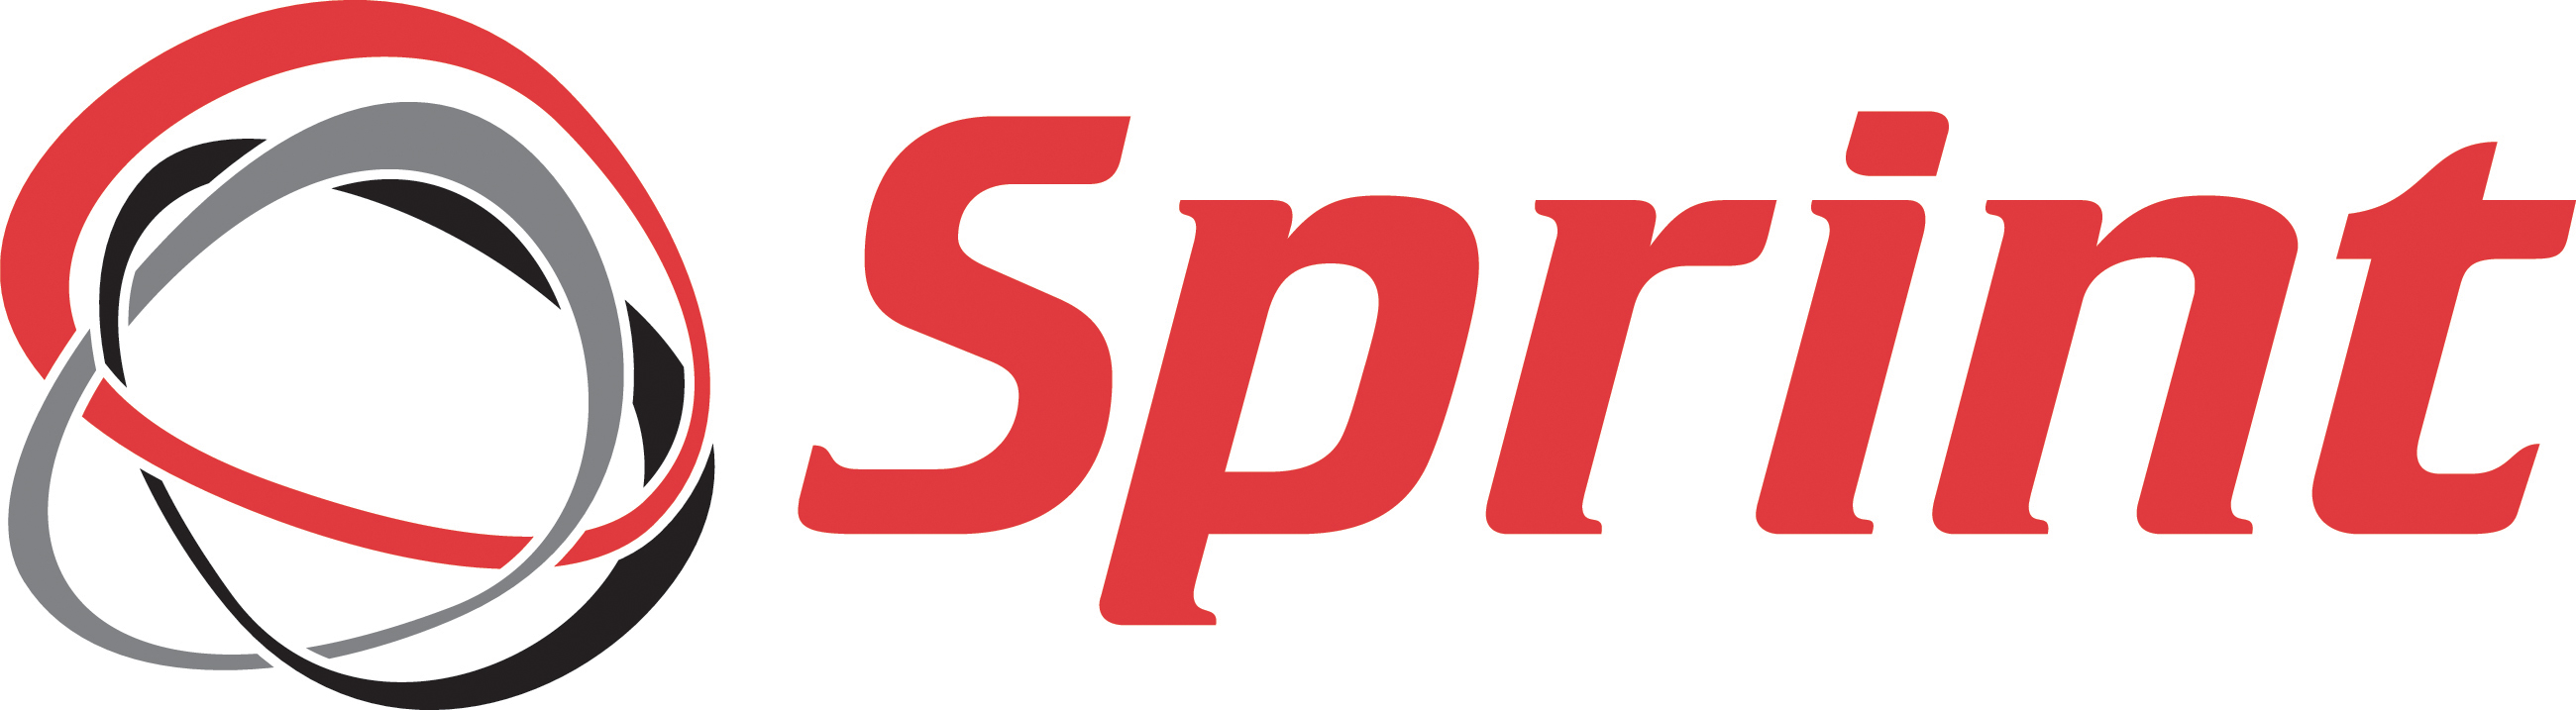 Sprint2008 logo